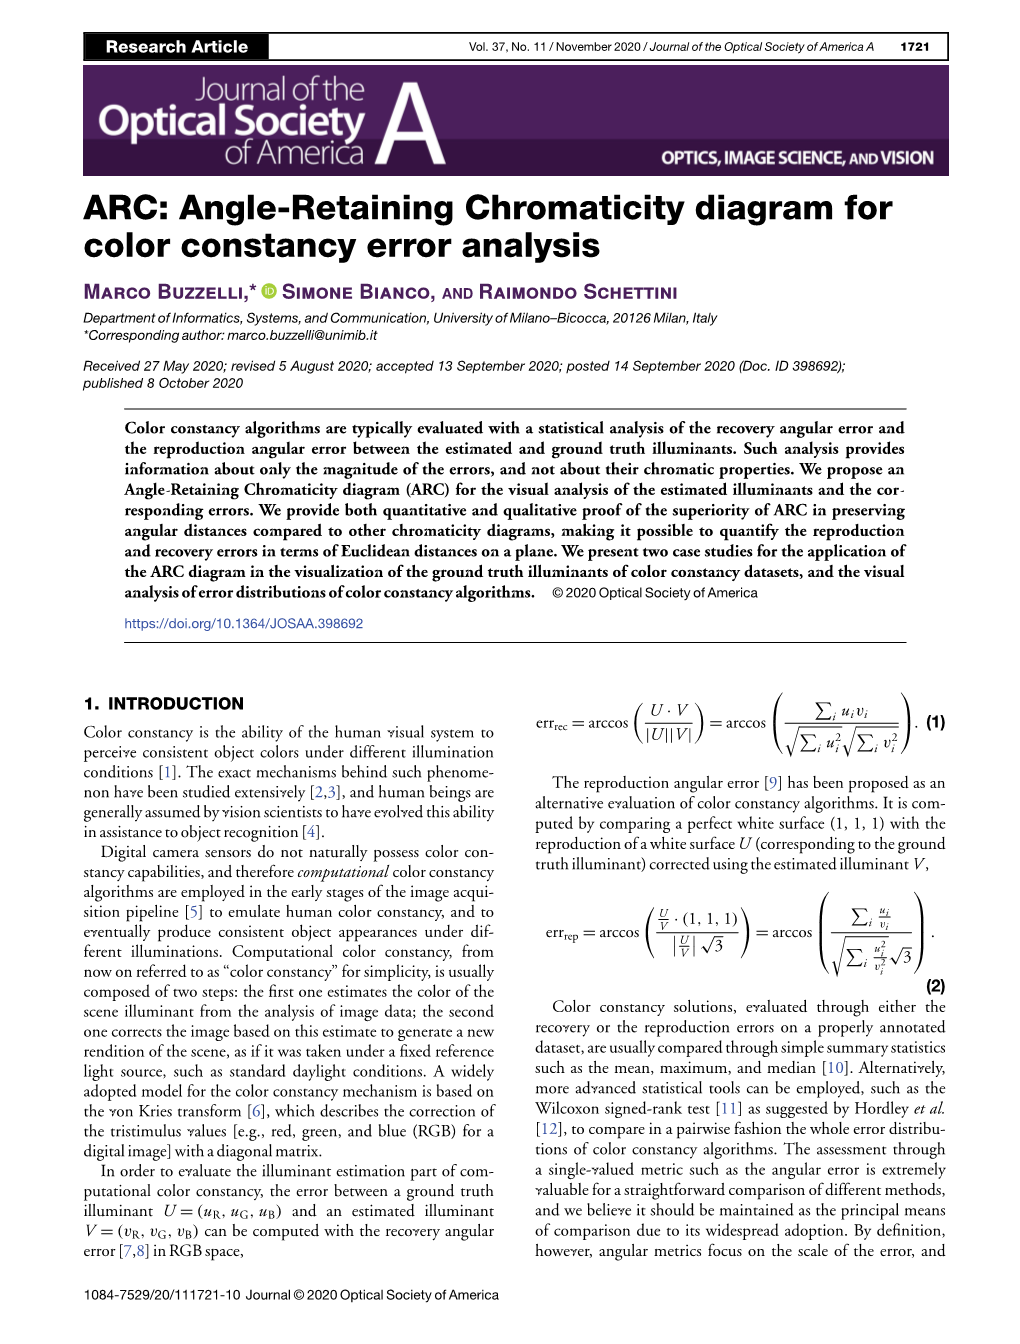 Angle-Retaining Chromaticity Diagram for Color Constancy Error Analysis